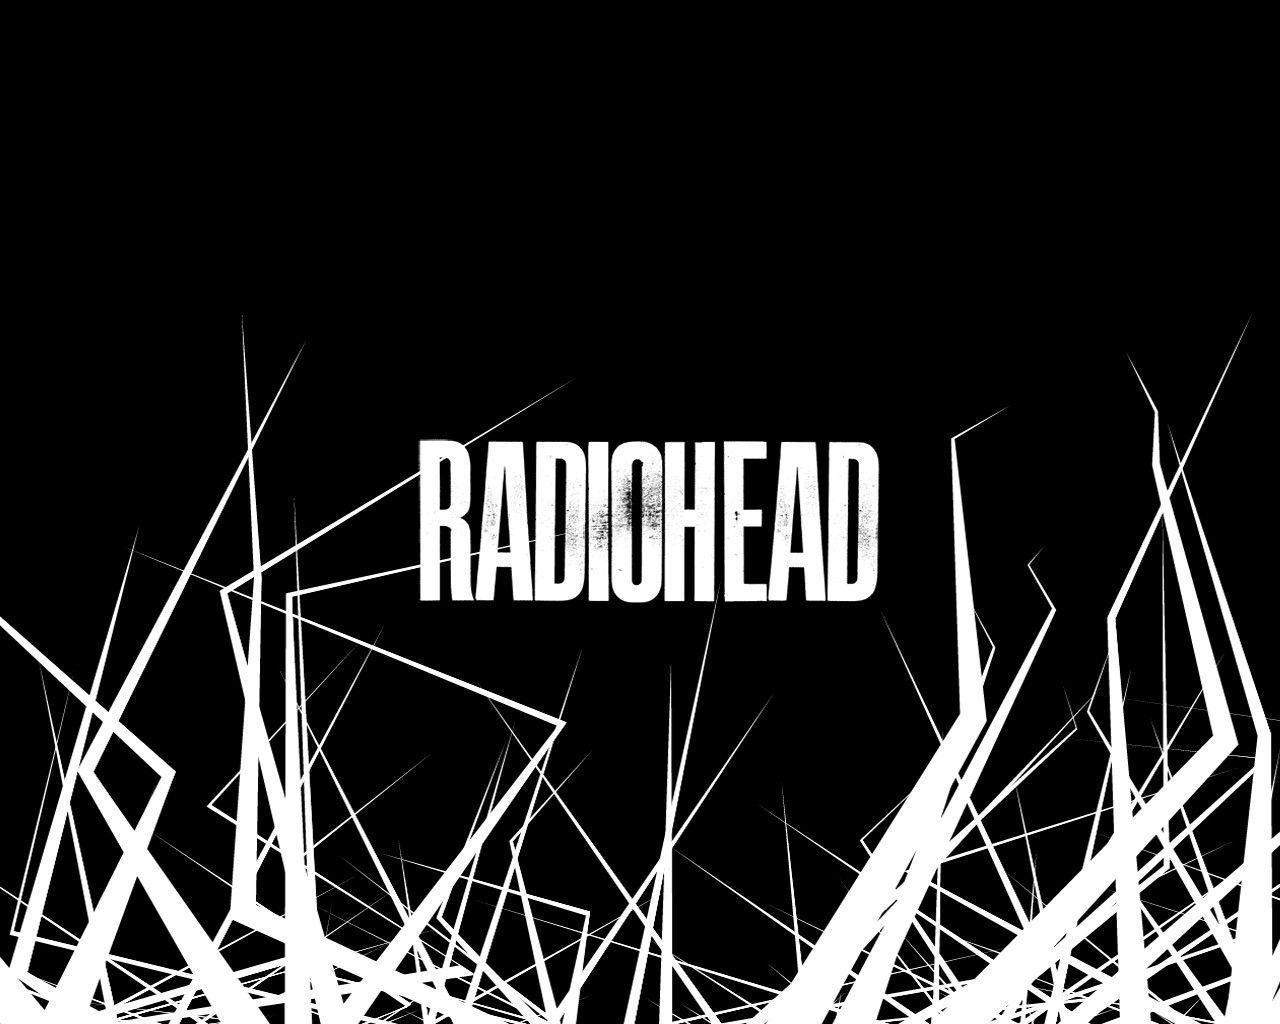 Radiohead Wallpaper 1080p 62 images